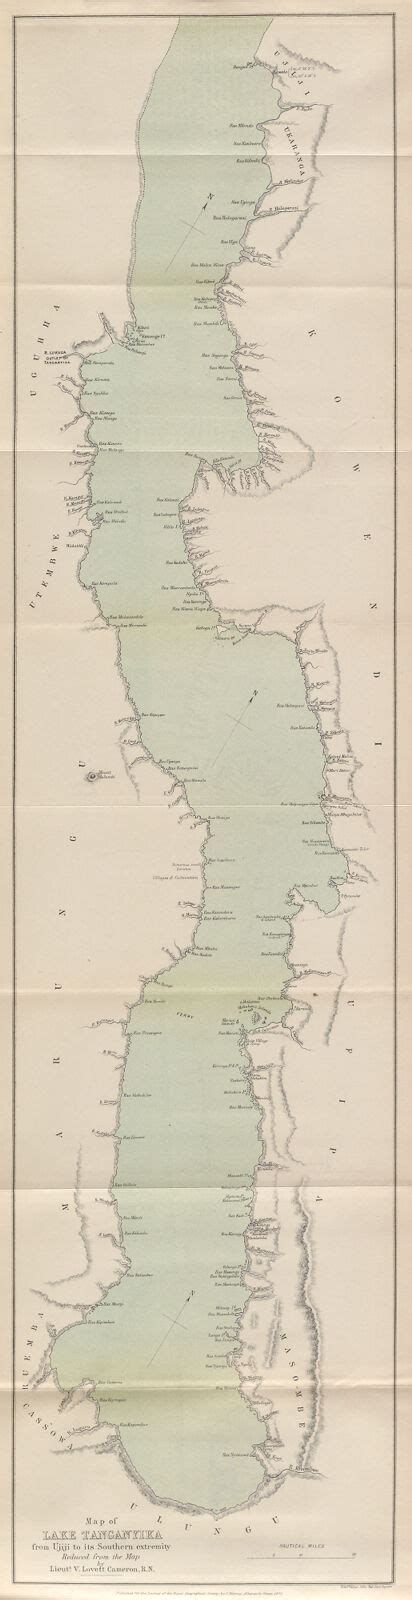 It lies in four countries' territories: Map of Lake Tanganyika from Ujiji to its Southern ...